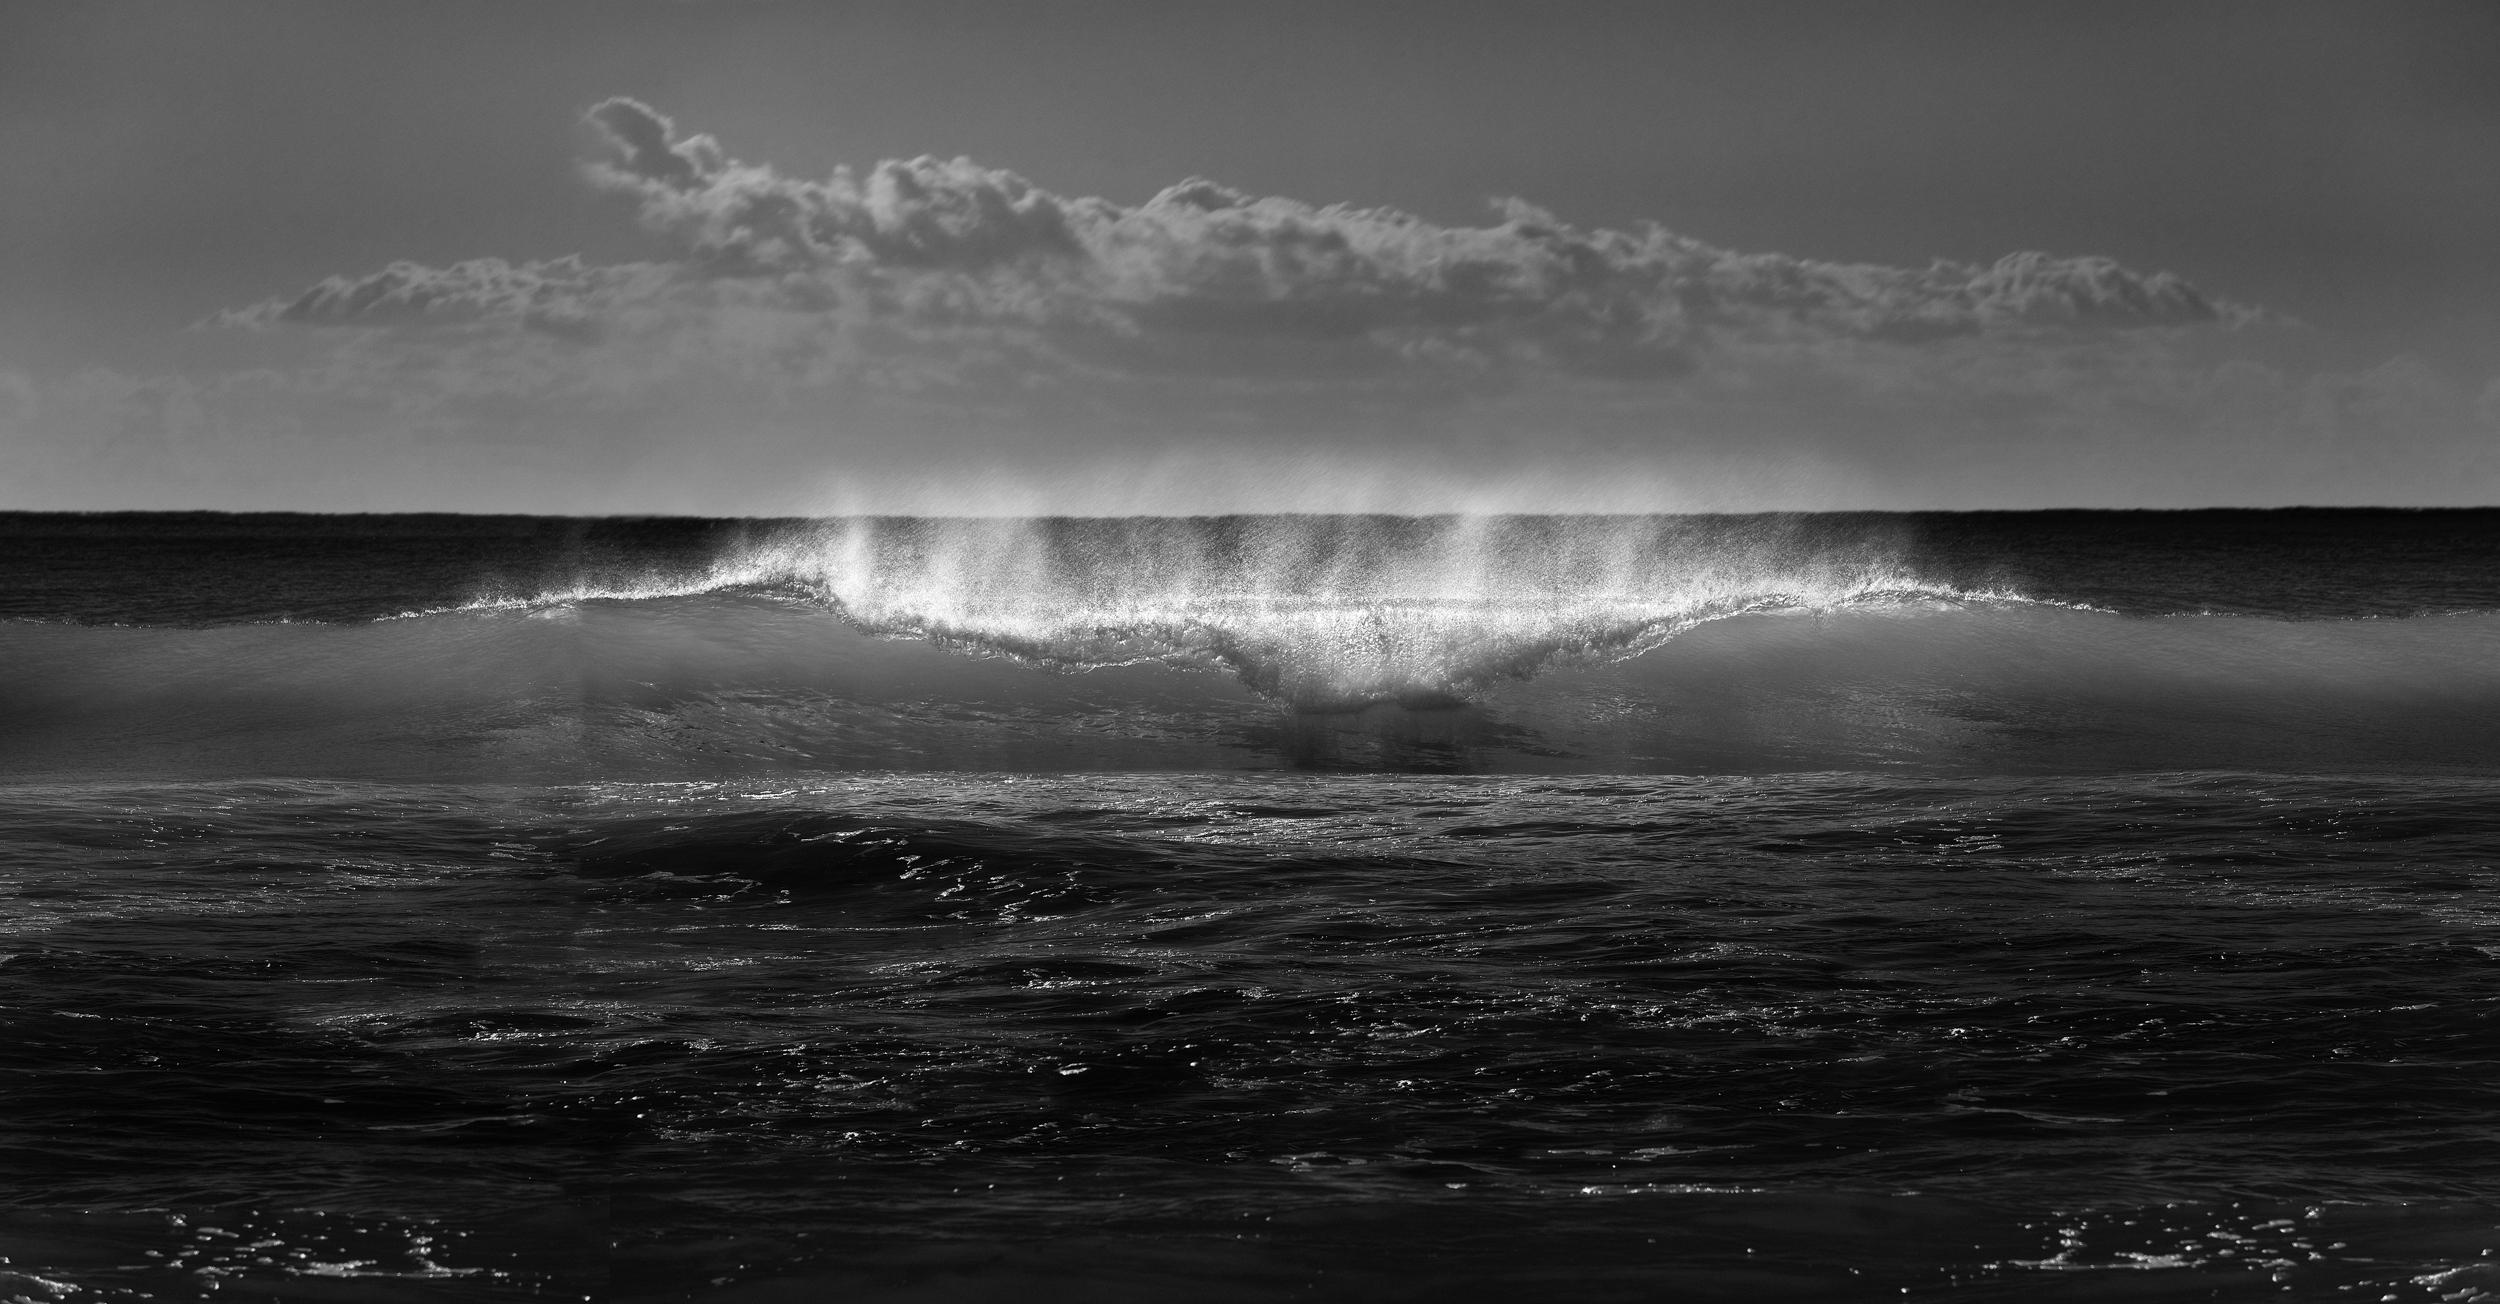 Ian Sanderson Landscape Photograph - Wave 2 - Signed limited edition fine art print, Black white photo, Oversize, Sea